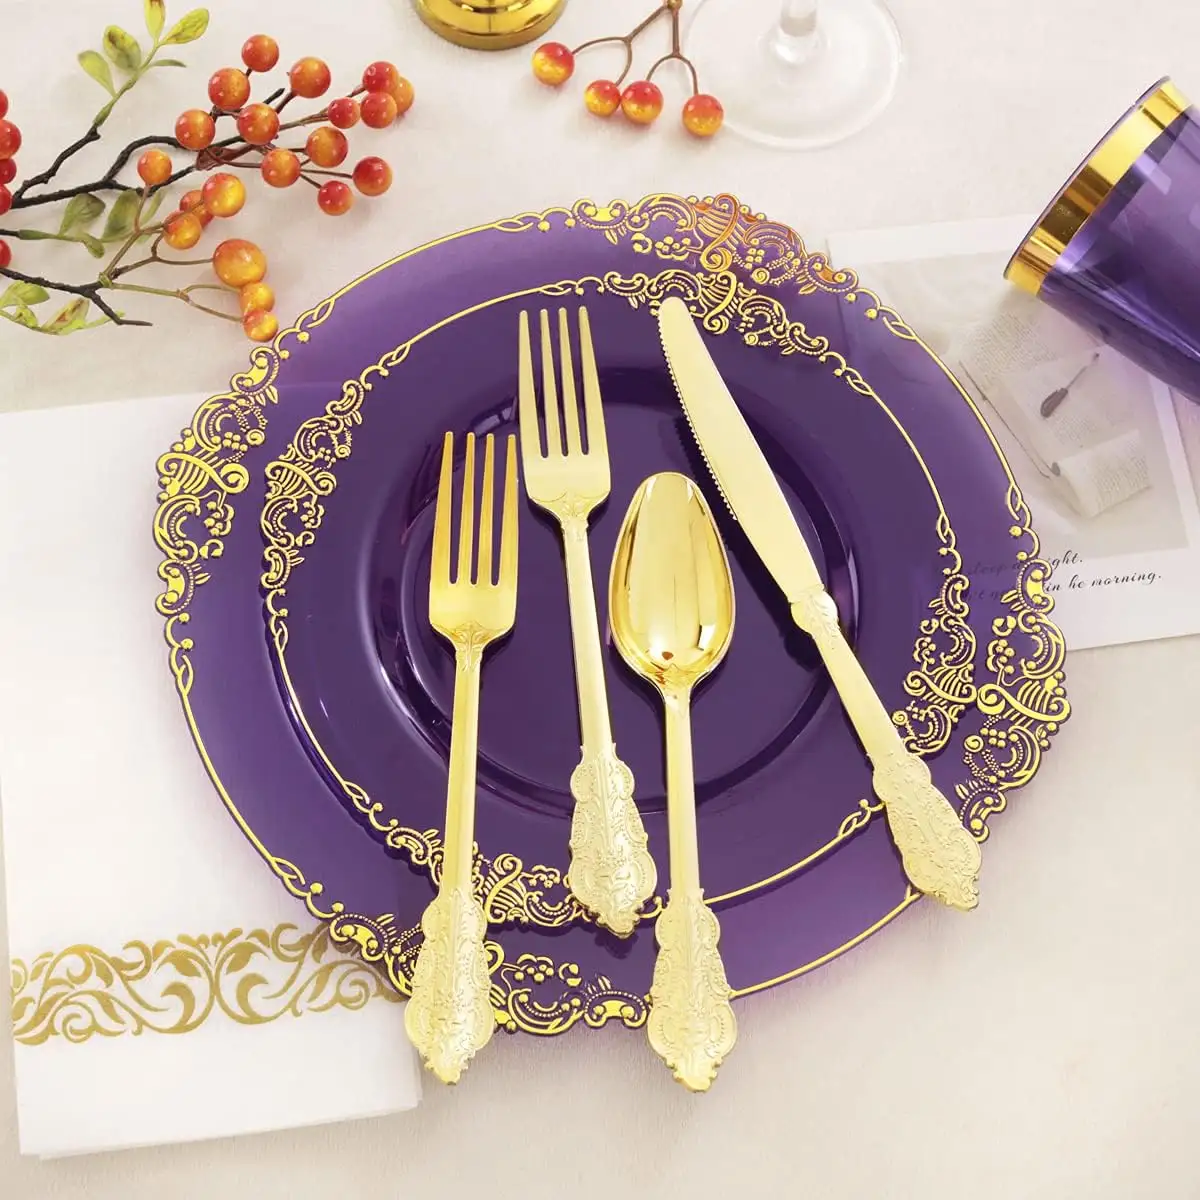 Luxury transparent gold rose lace rim plates dishes premium plastic charger plates set wedding disposable dinner plates